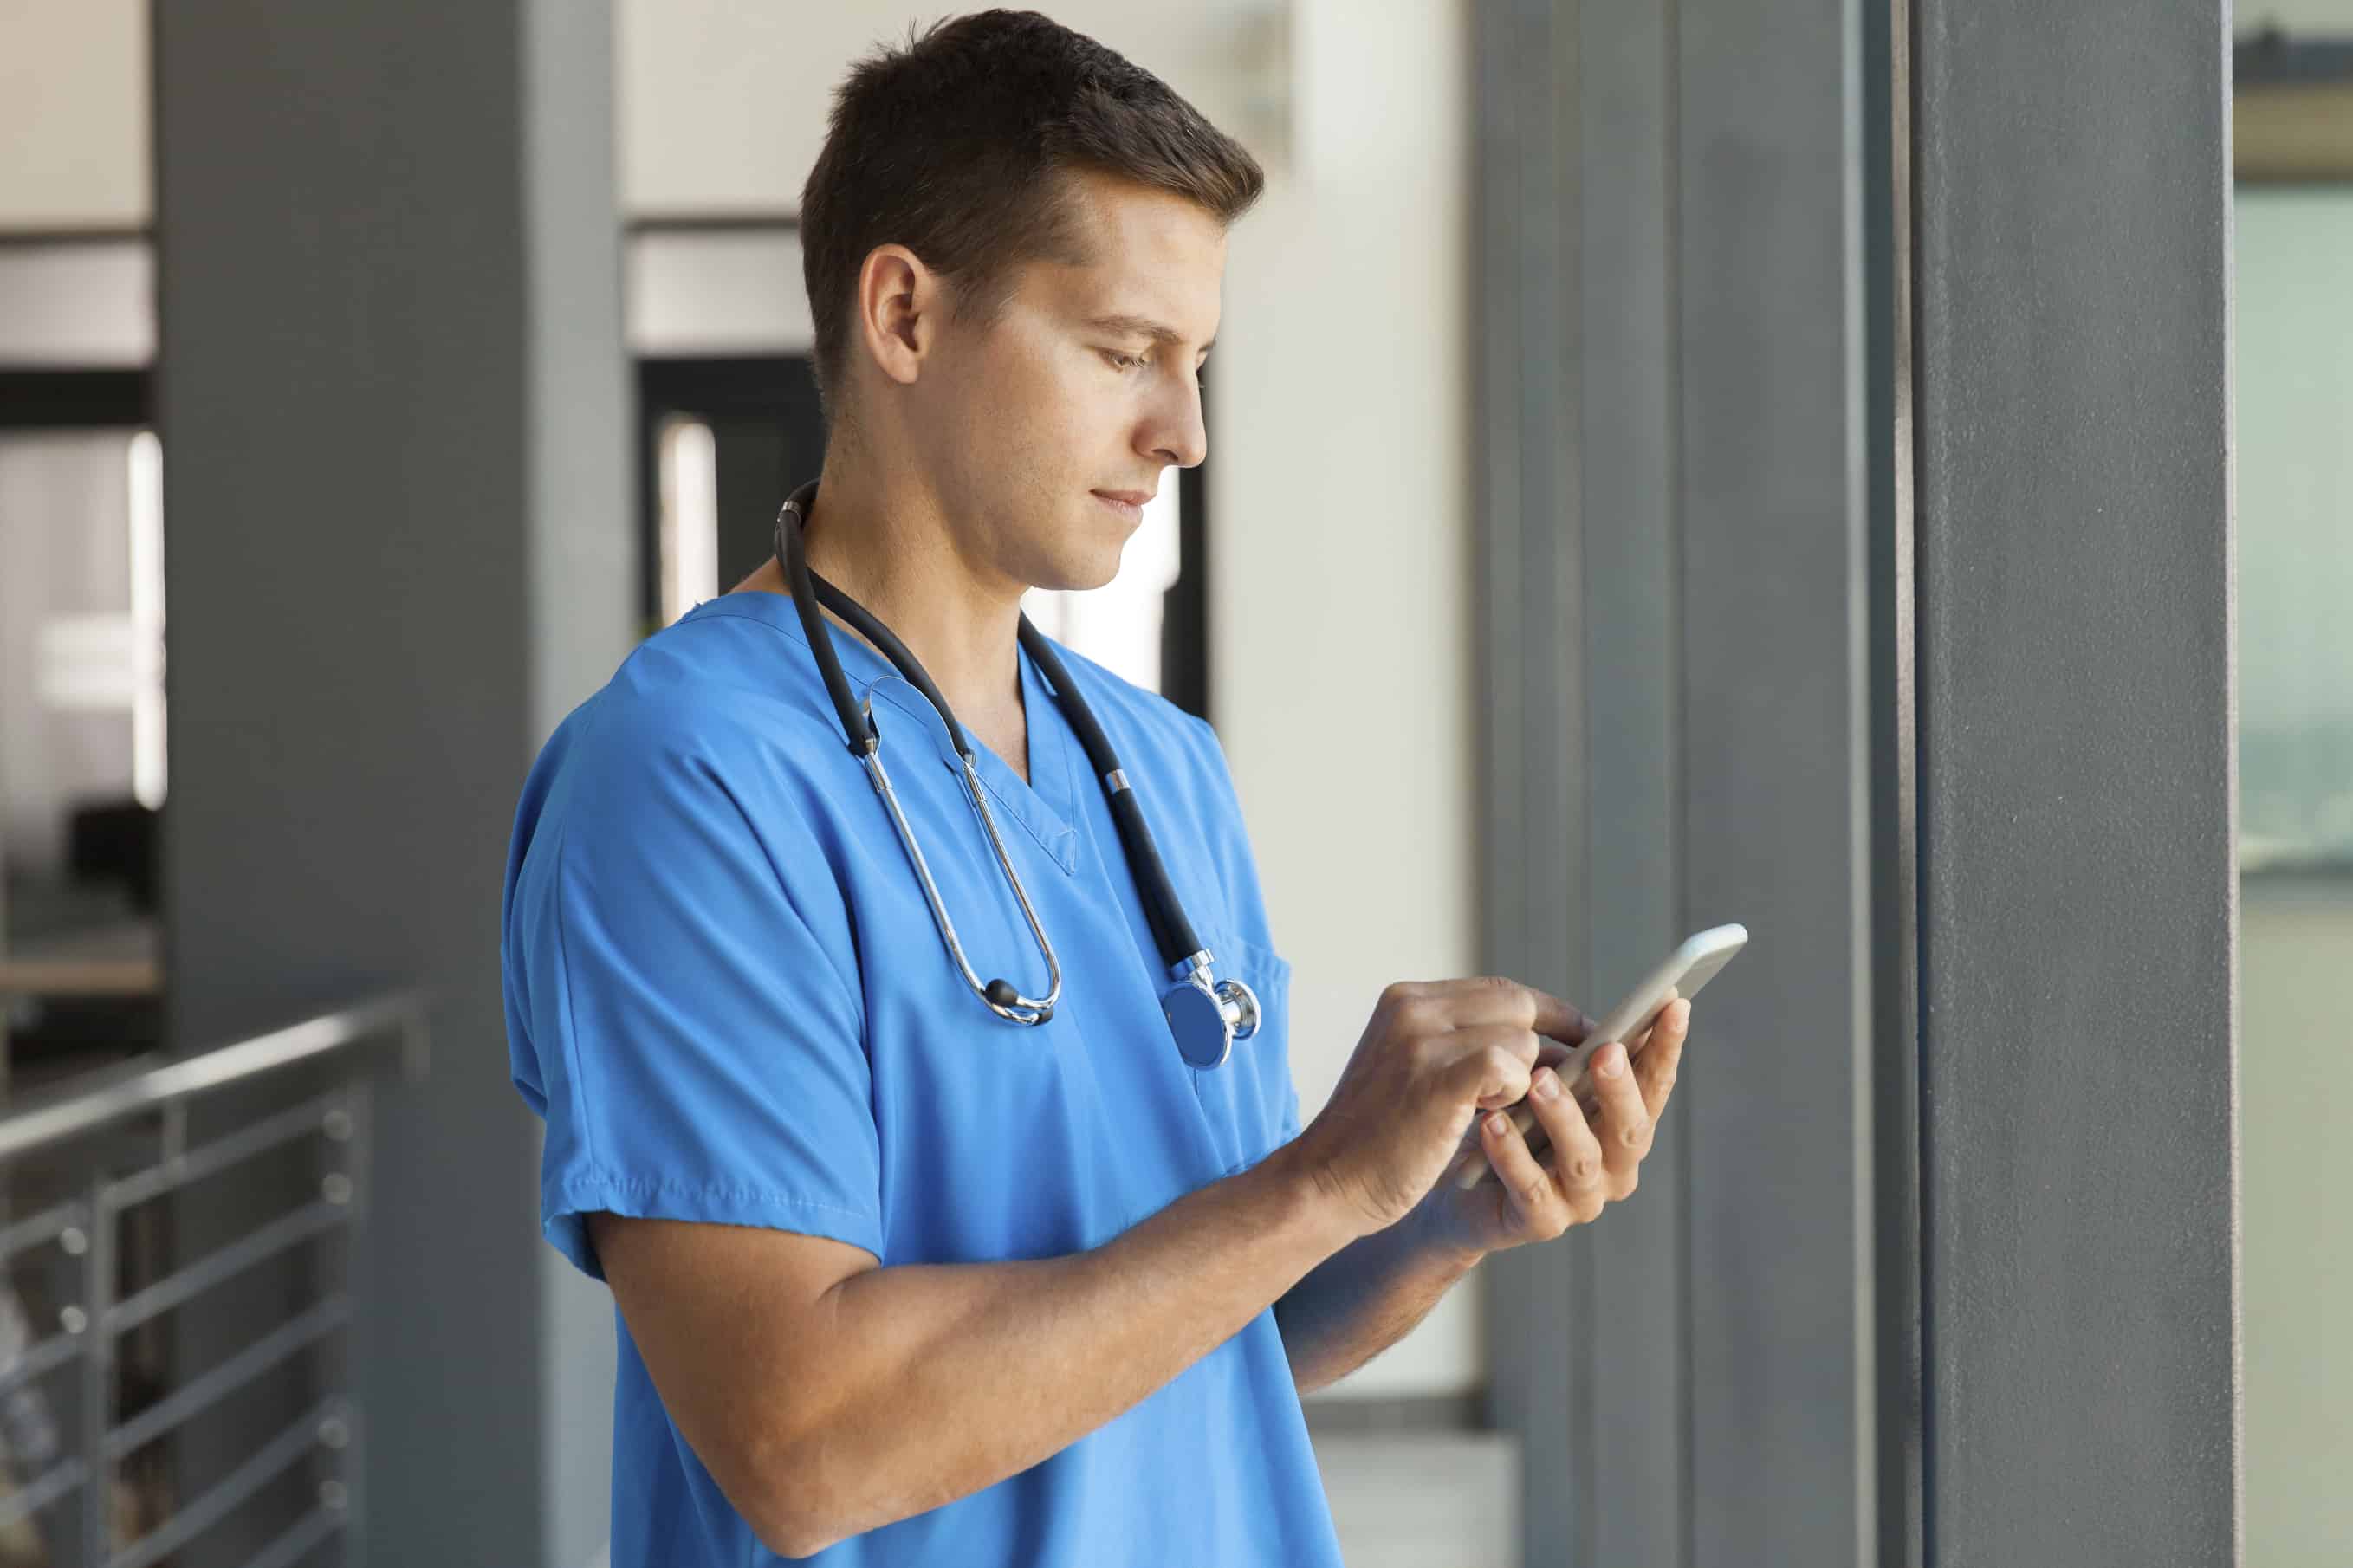 modern medical professional using smart phone